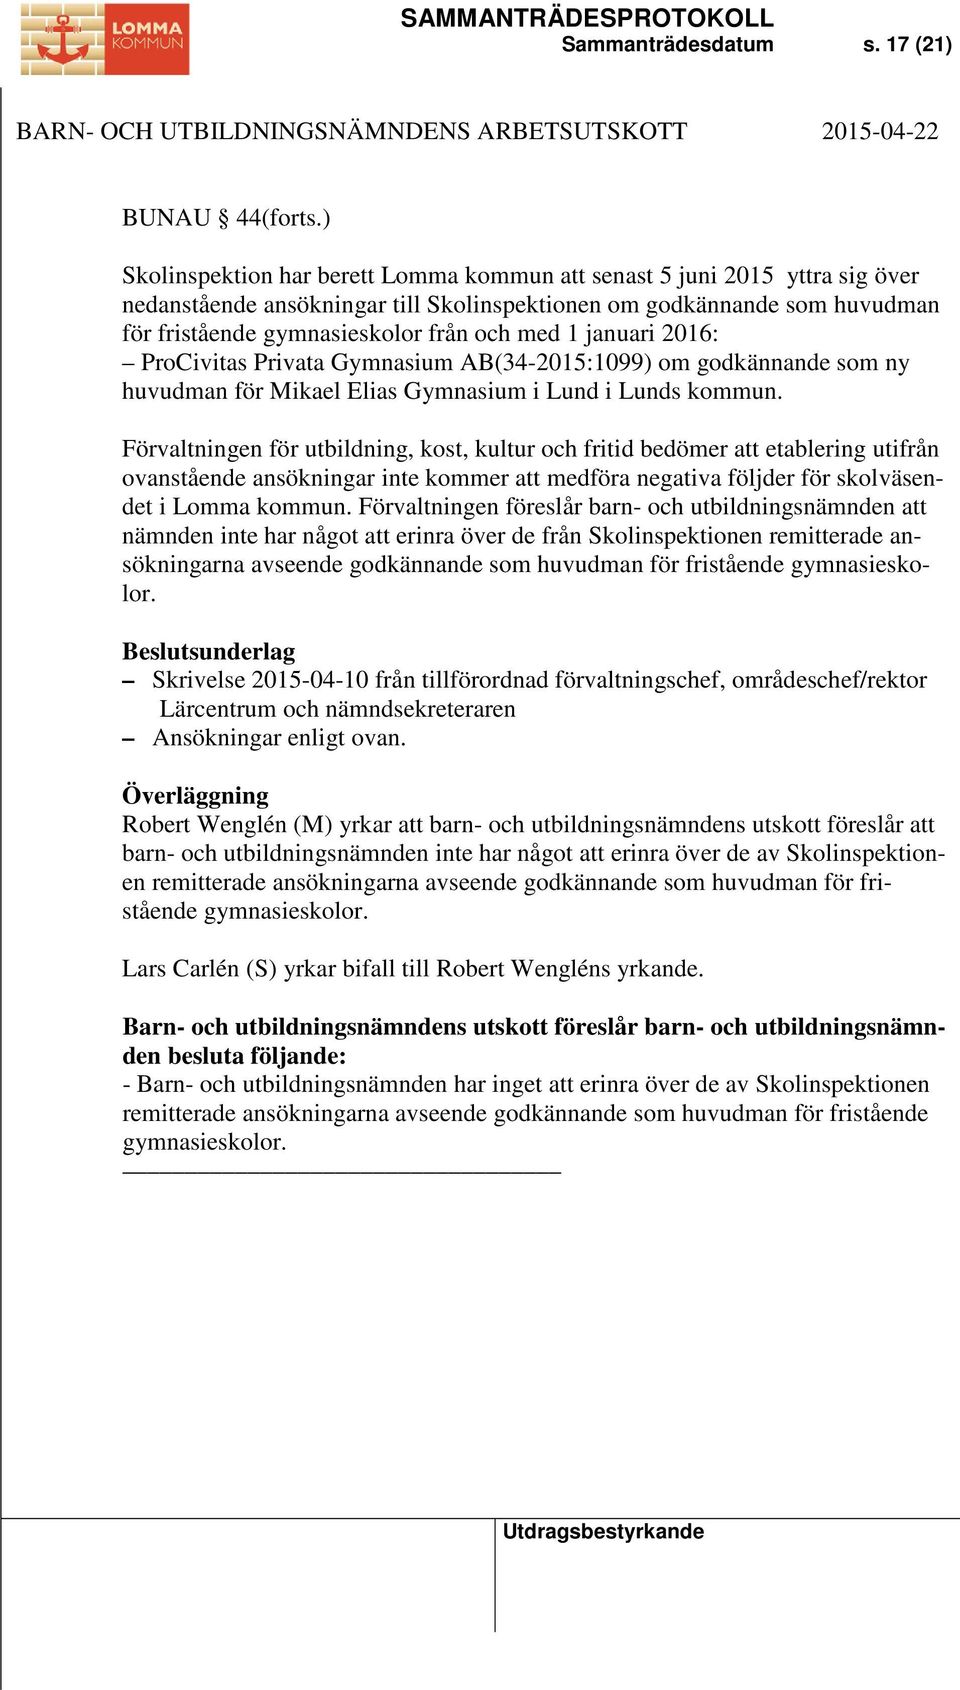 januari 2016: ProCivitas Privata Gymnasium AB(34-2015:1099) om godkännande som ny huvudman för Mikael Elias Gymnasium i Lund i Lunds kommun.